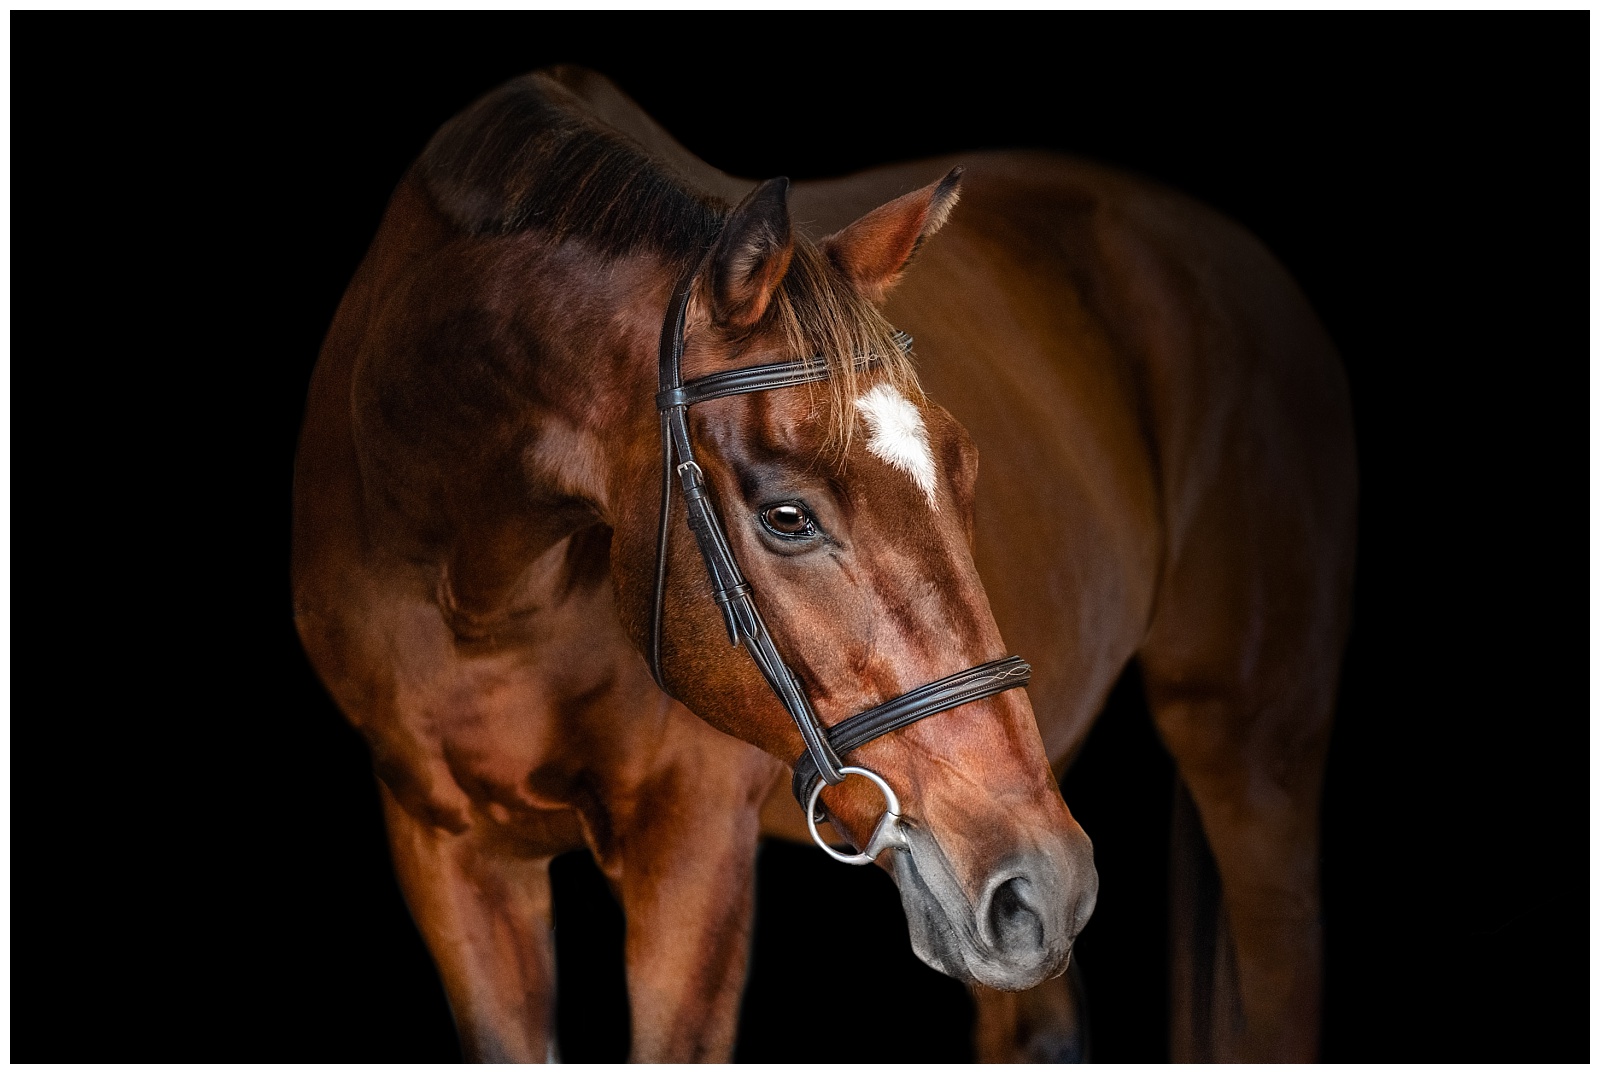 Fine art horse photographer near Tallahassee, FL. Black background photos of horses.